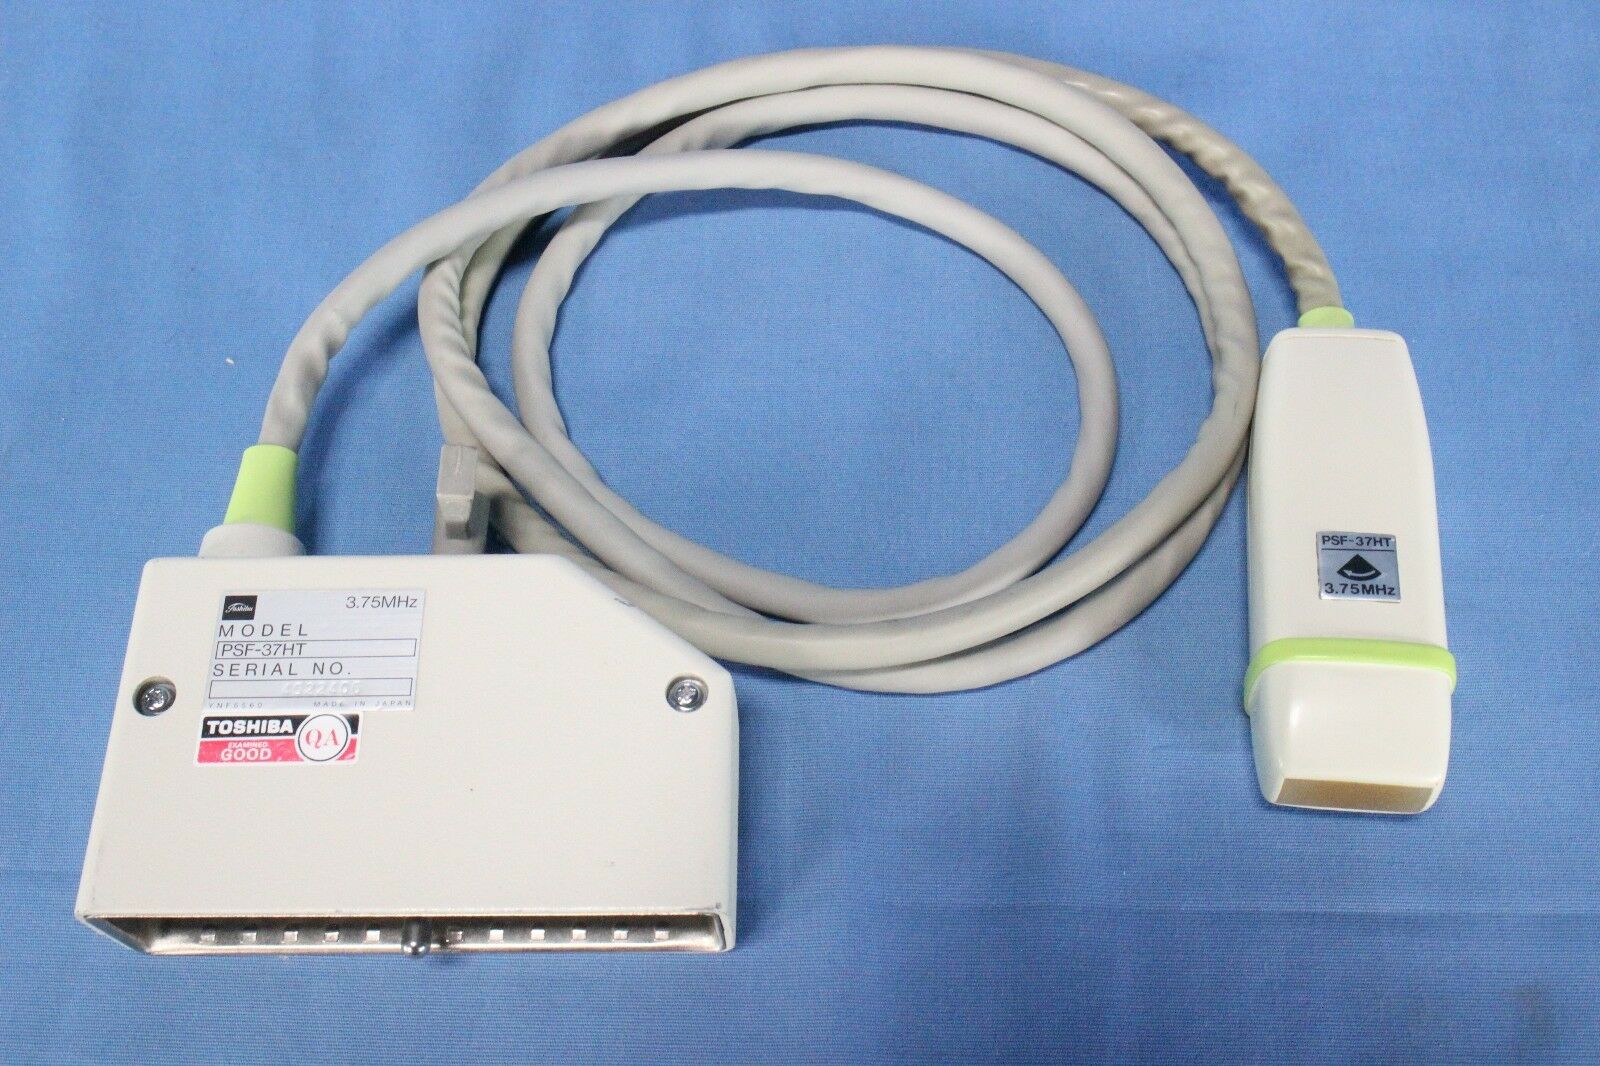 Toshiba PSF-37HT Ultrasound Transducer 3.75MHz Ultrasound Probe with Warranty DIAGNOSTIC ULTRASOUND MACHINES FOR SALE